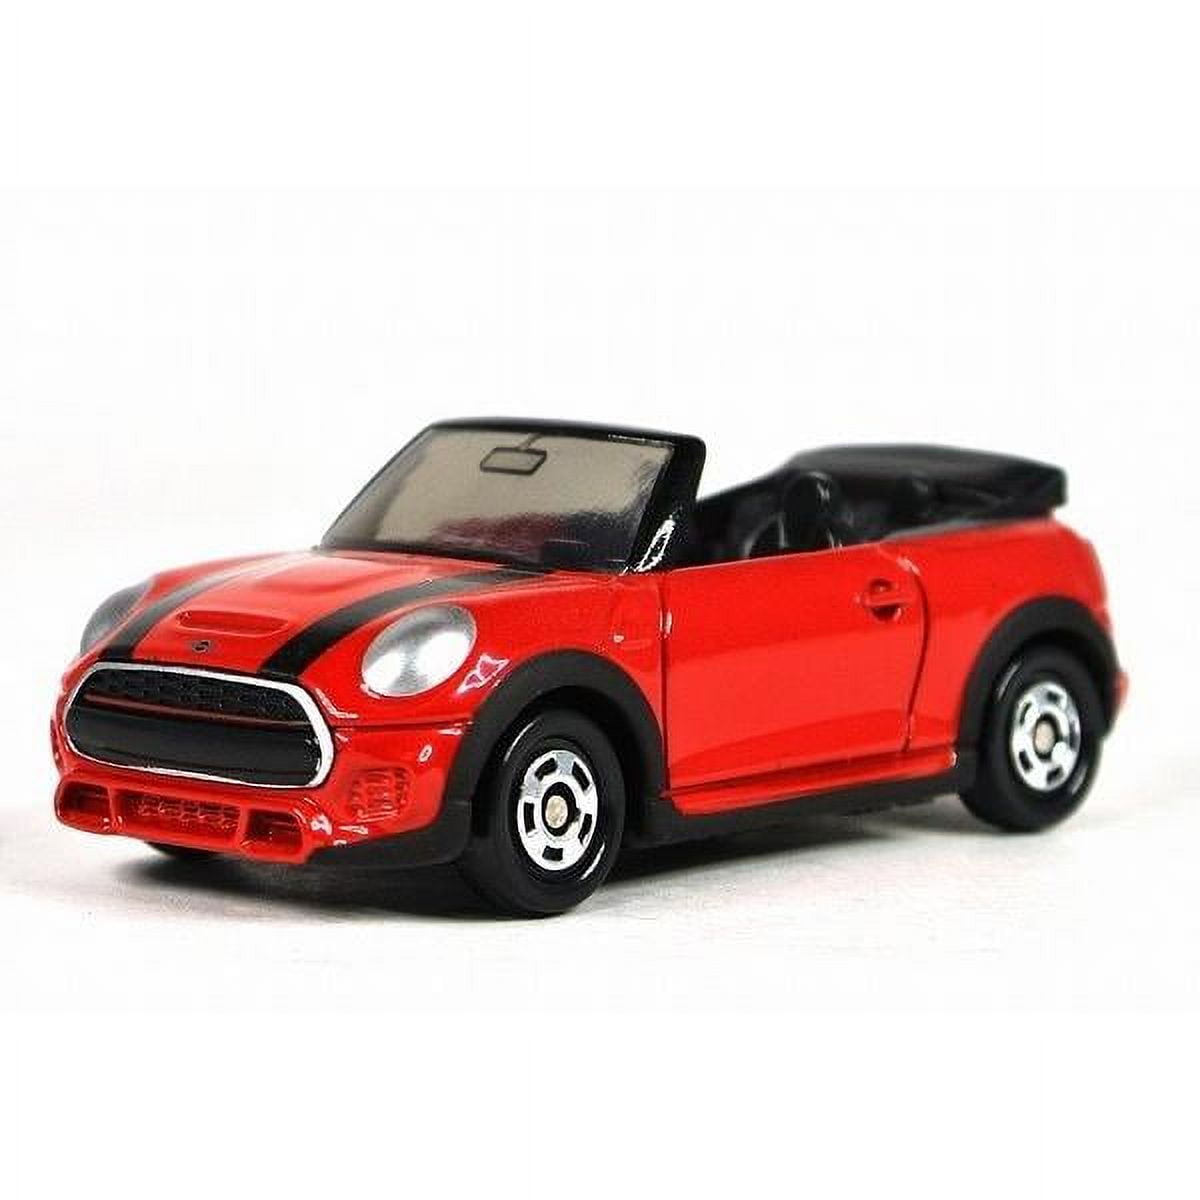 Takara Tomy Tomica #37 Mini John Cooper Works Miniature Car Bliseter Pack